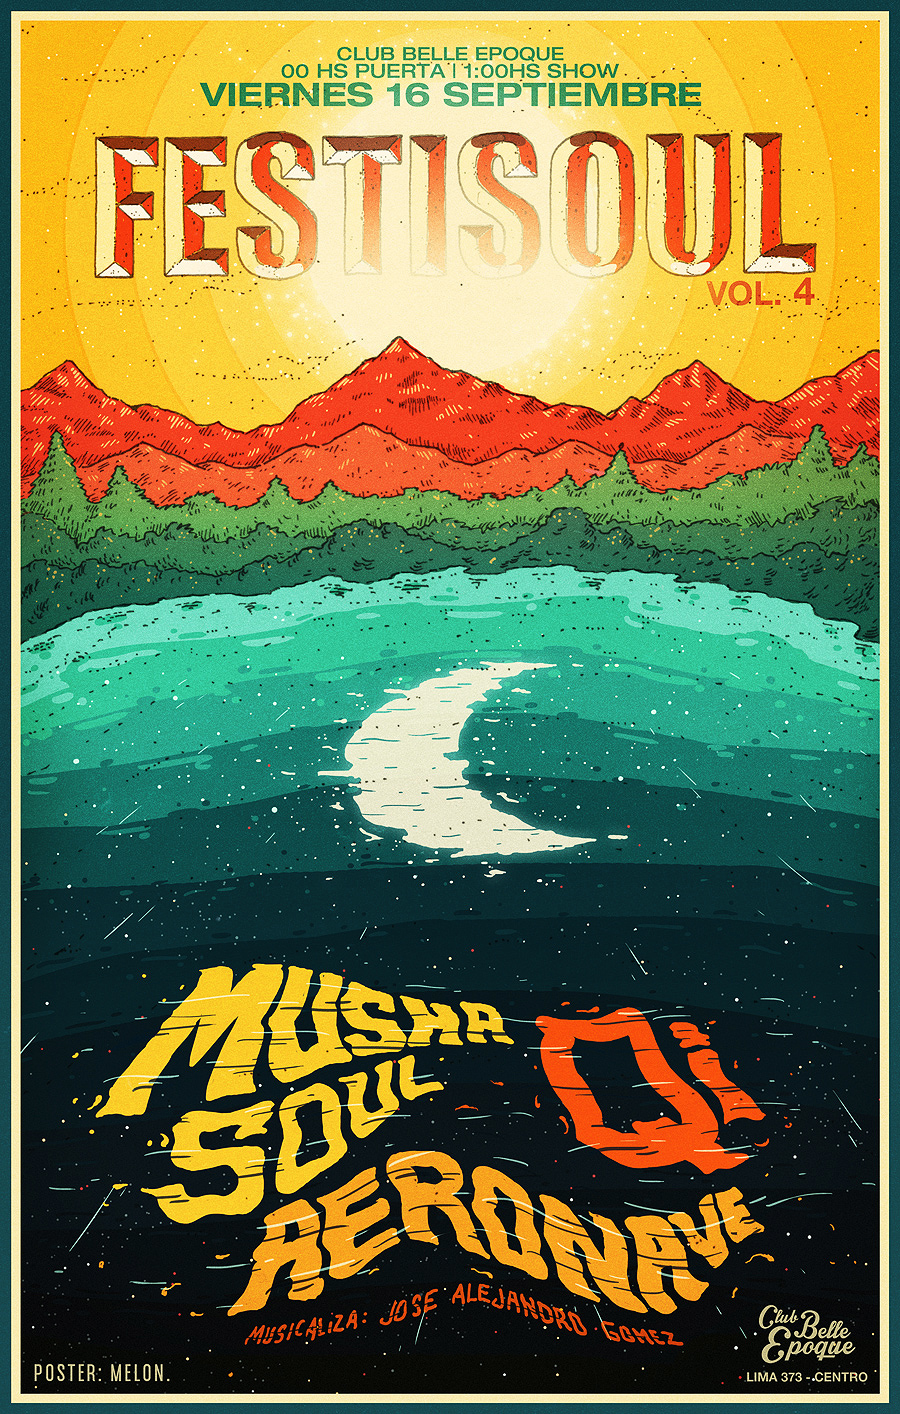 GigPoster bandposter musicposter poster festisoul qi Musha Soul Club Belle Epoque cordoba aeronave